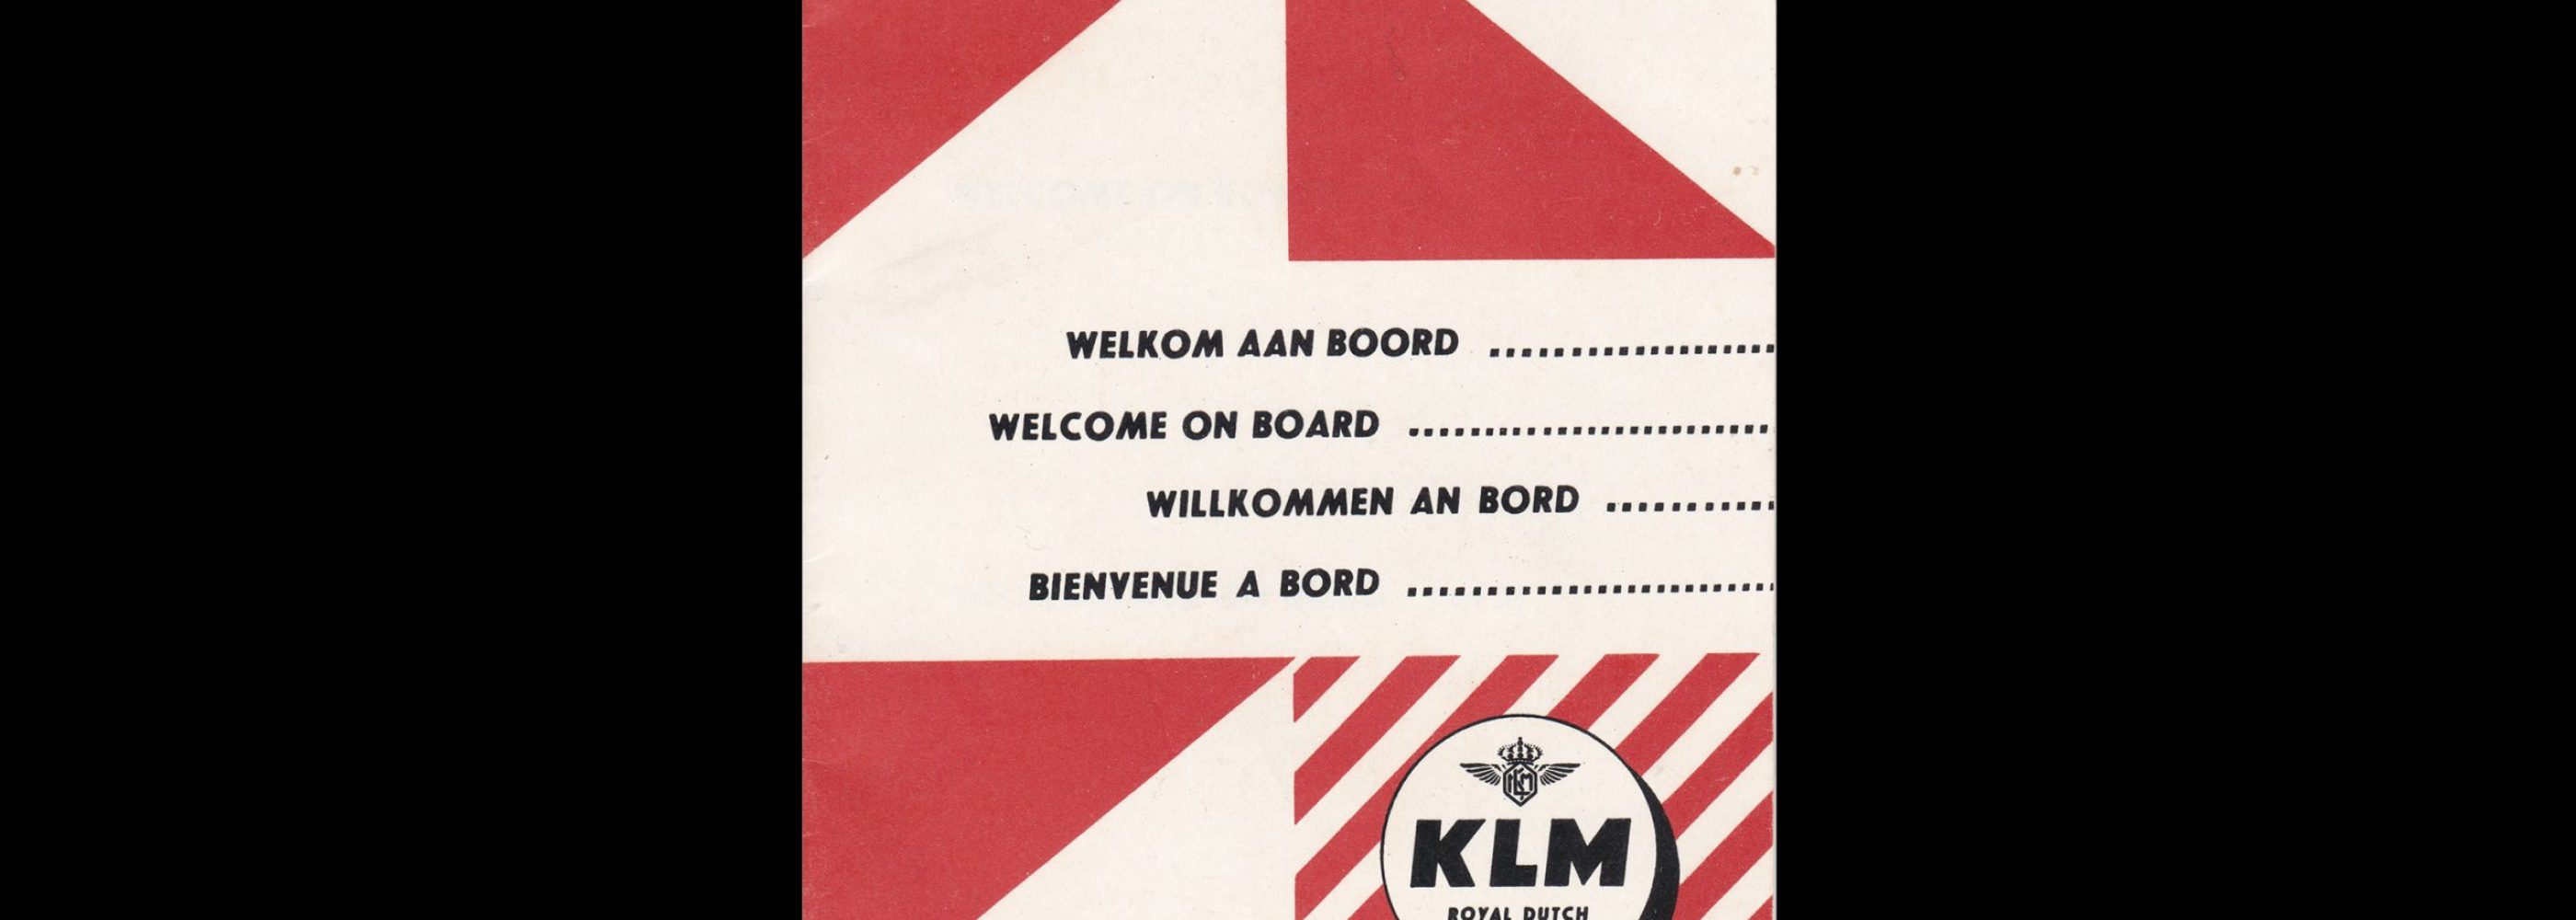 KLM On Board Information Brochure, 1958. Designed by Otto Treumann